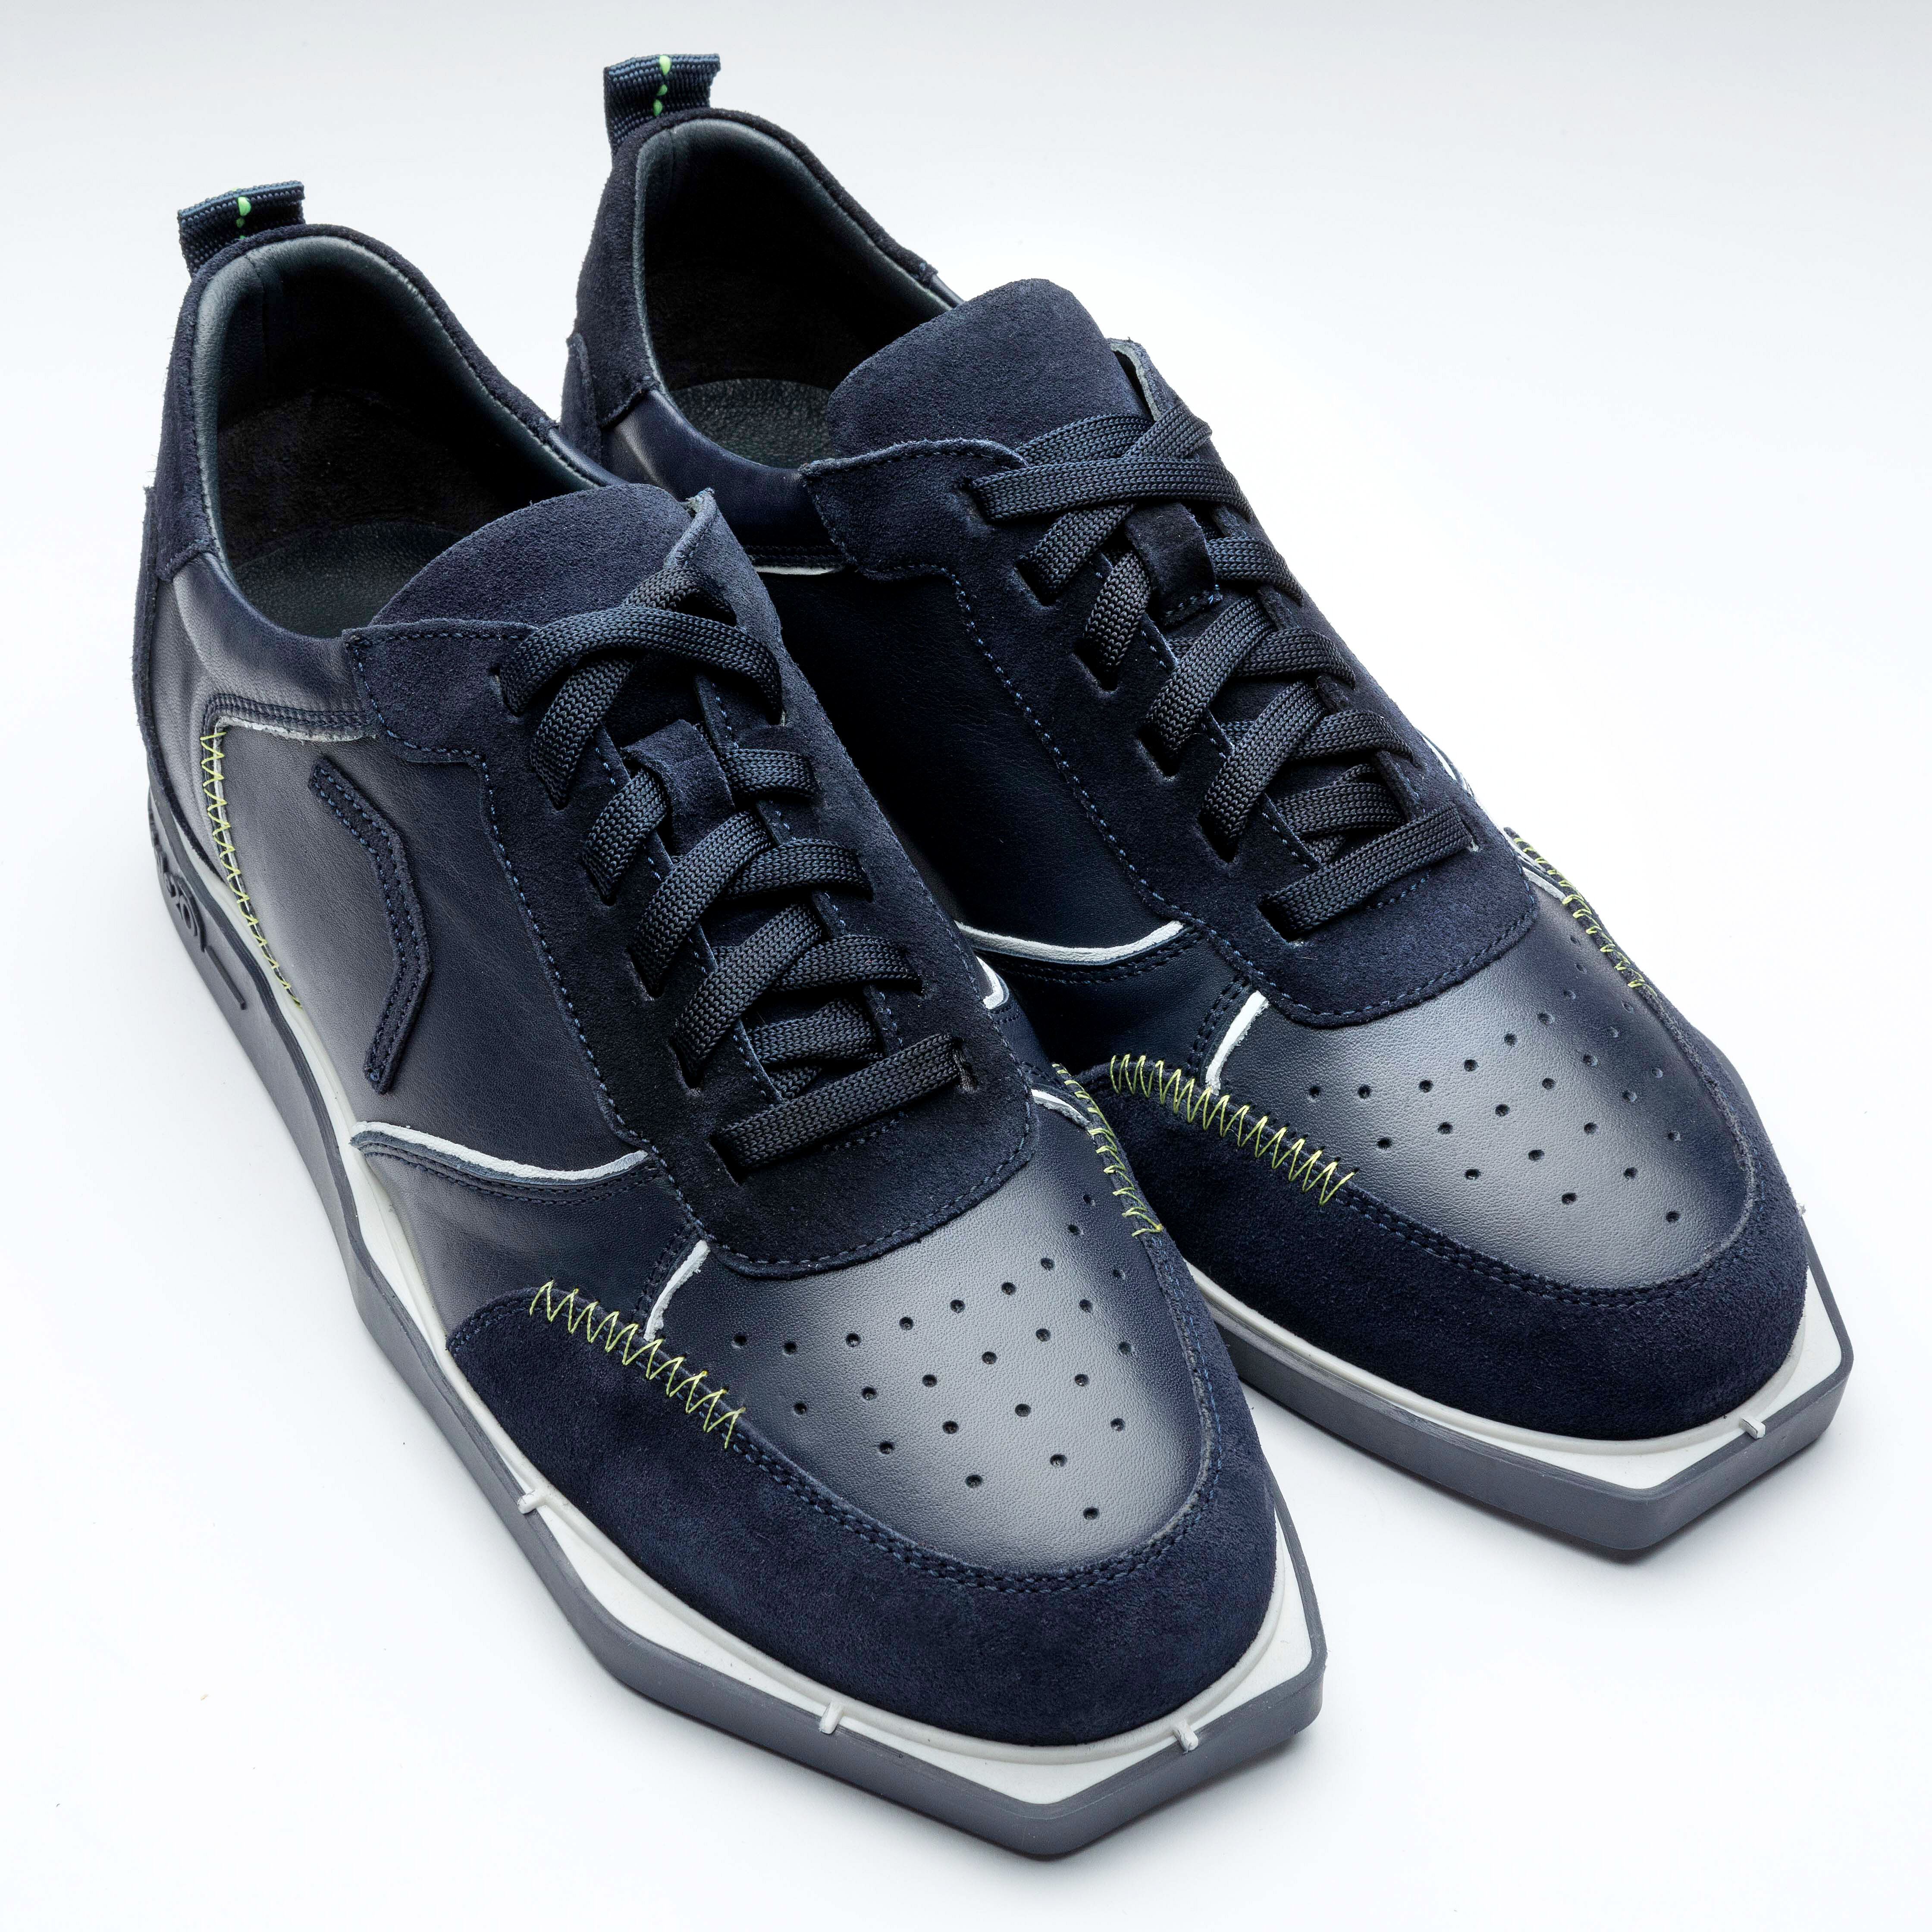 Triple20 Dartsshoes - Leder Blau/Weiß